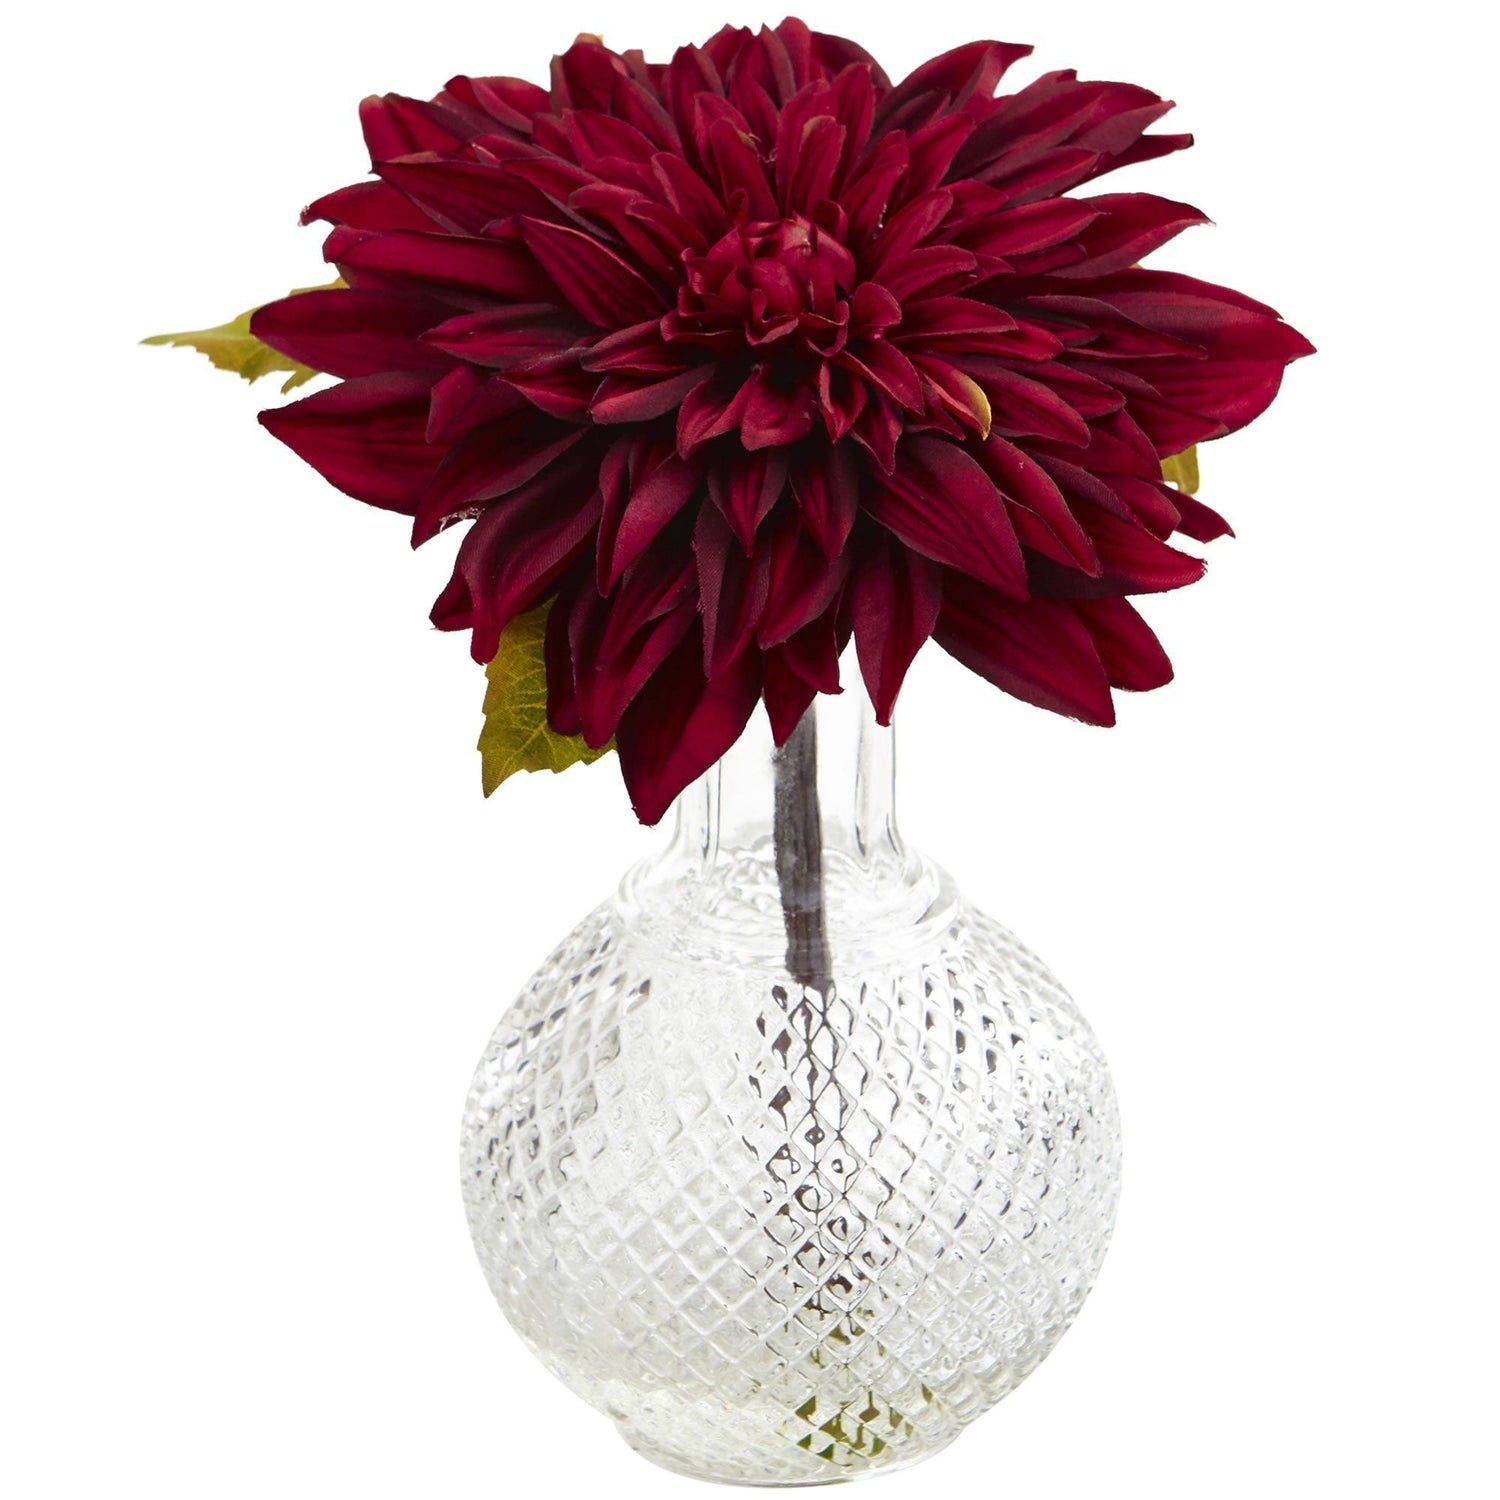 Dahlia w/Decorative Vase (Set of 3)